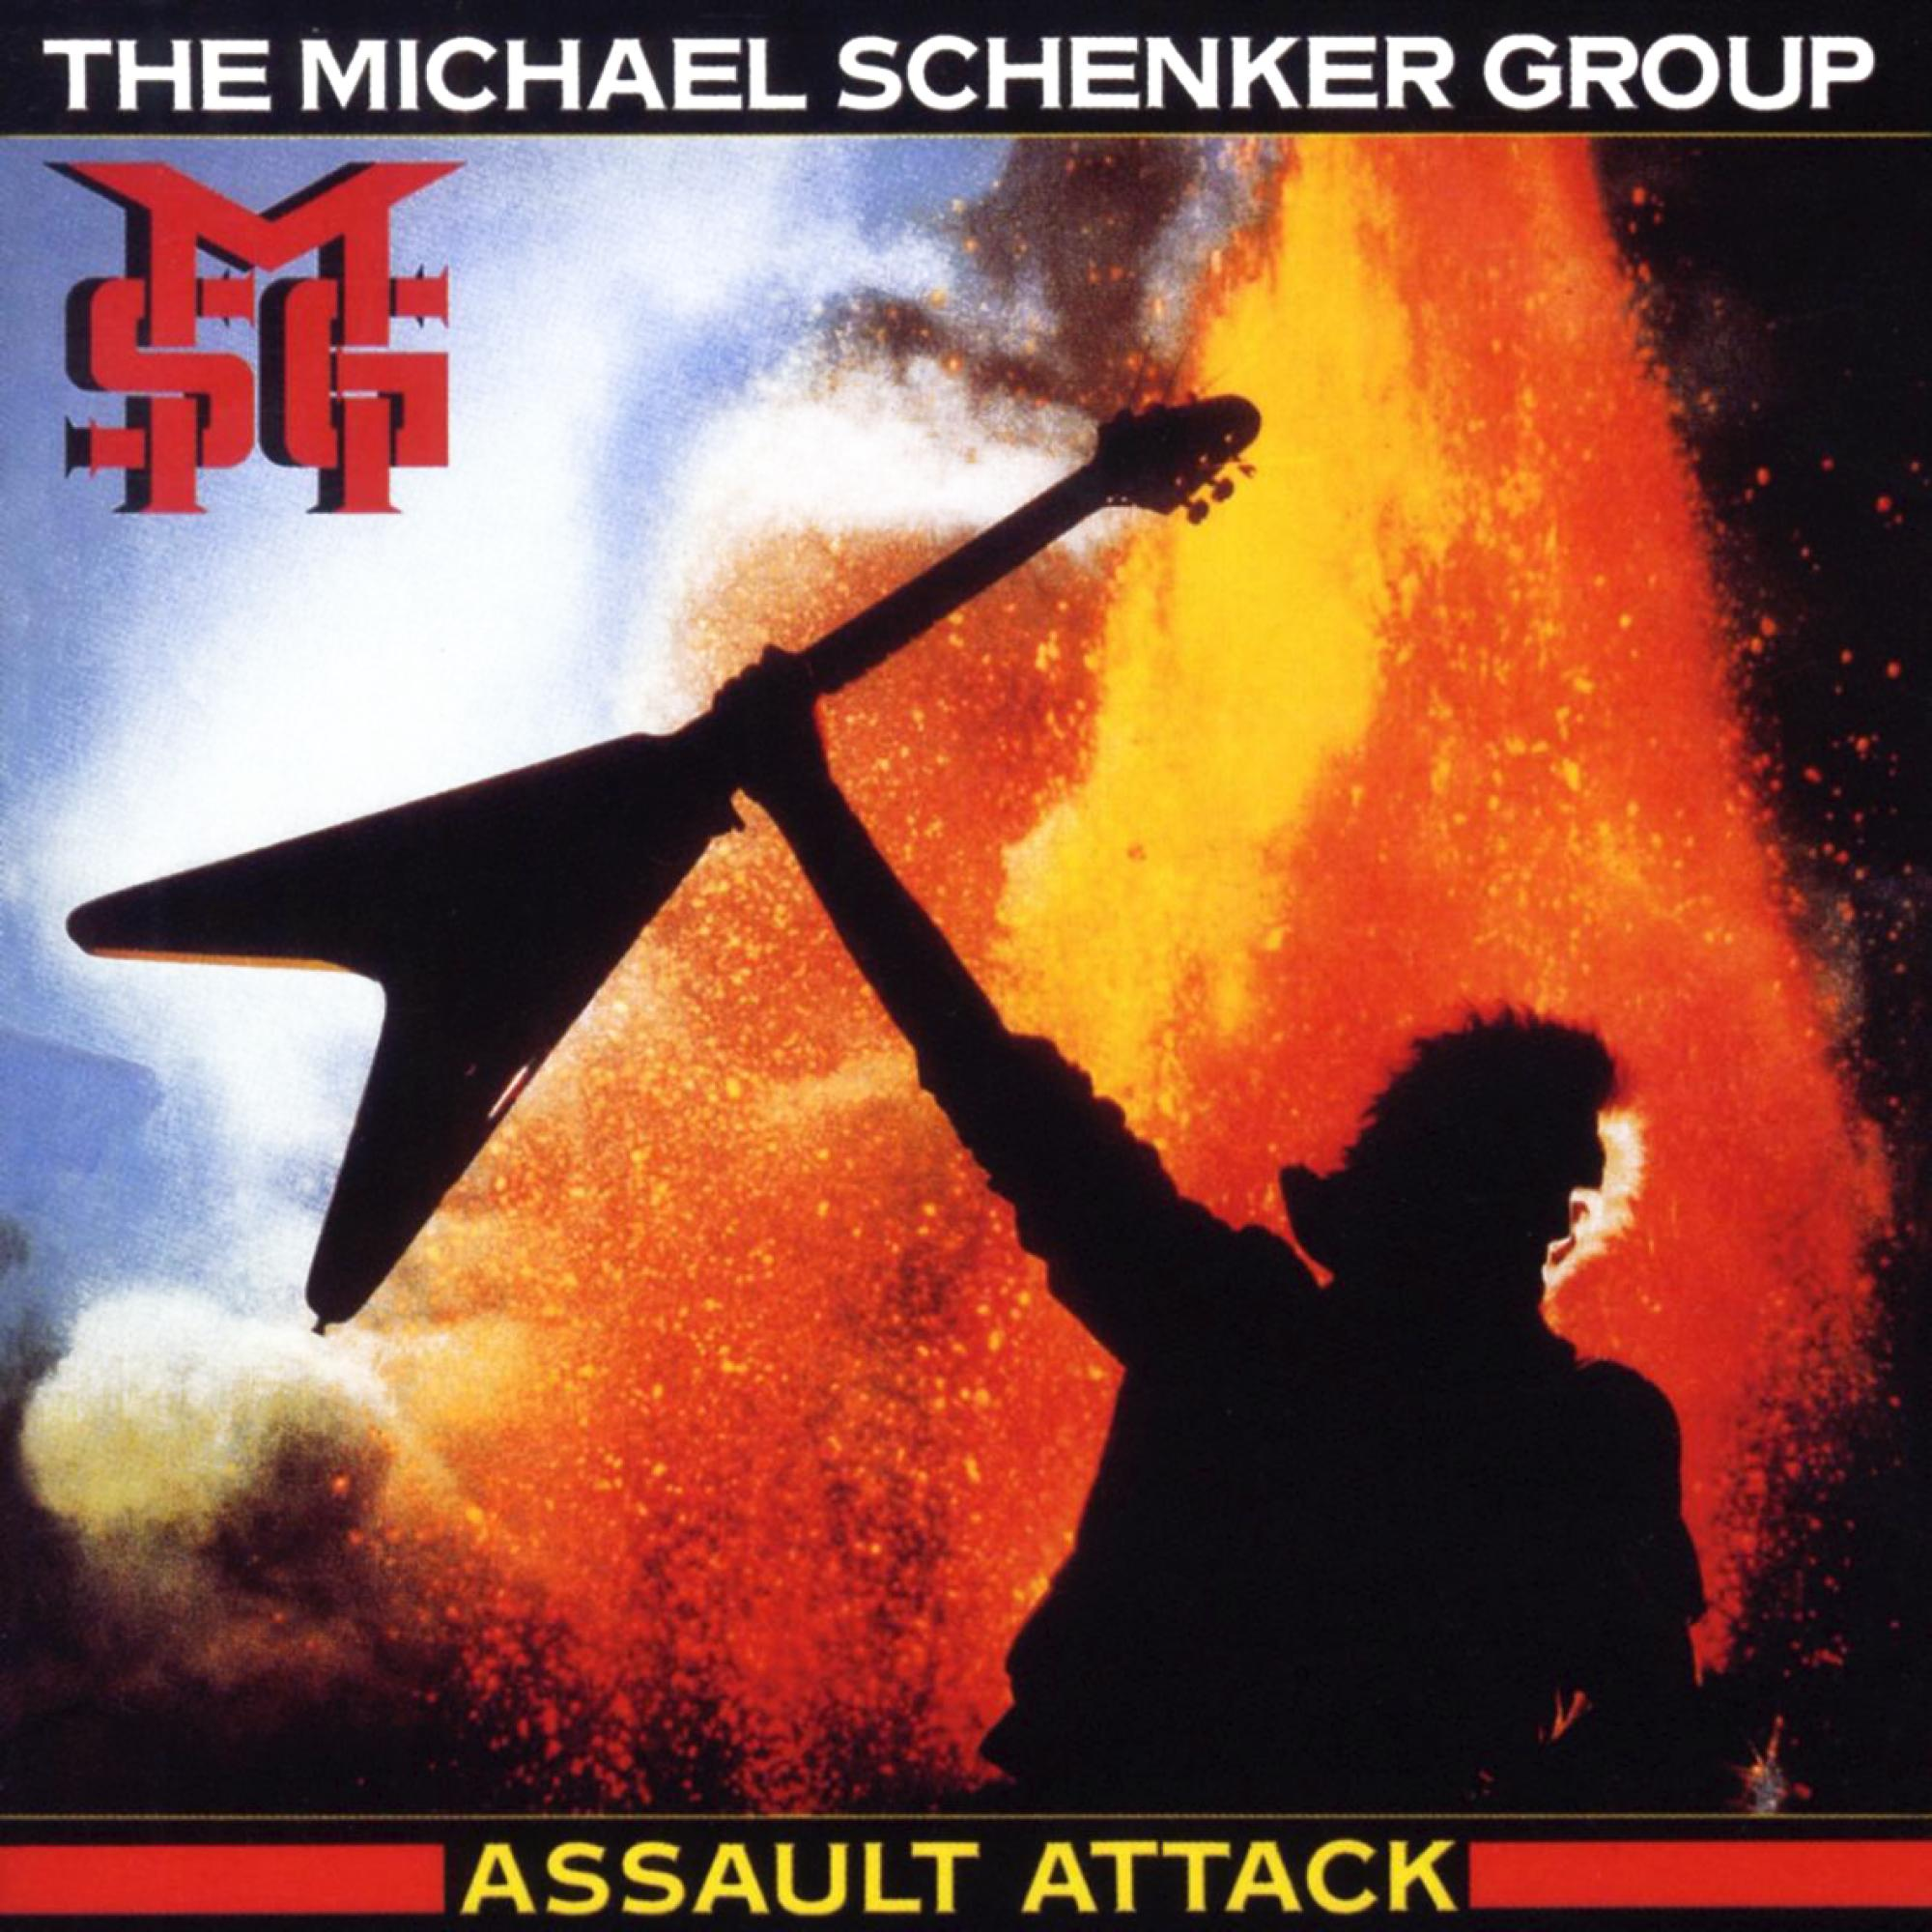 (CD) - Schenker, Attack-Remaster Micha Assault - Group Michael Schenker